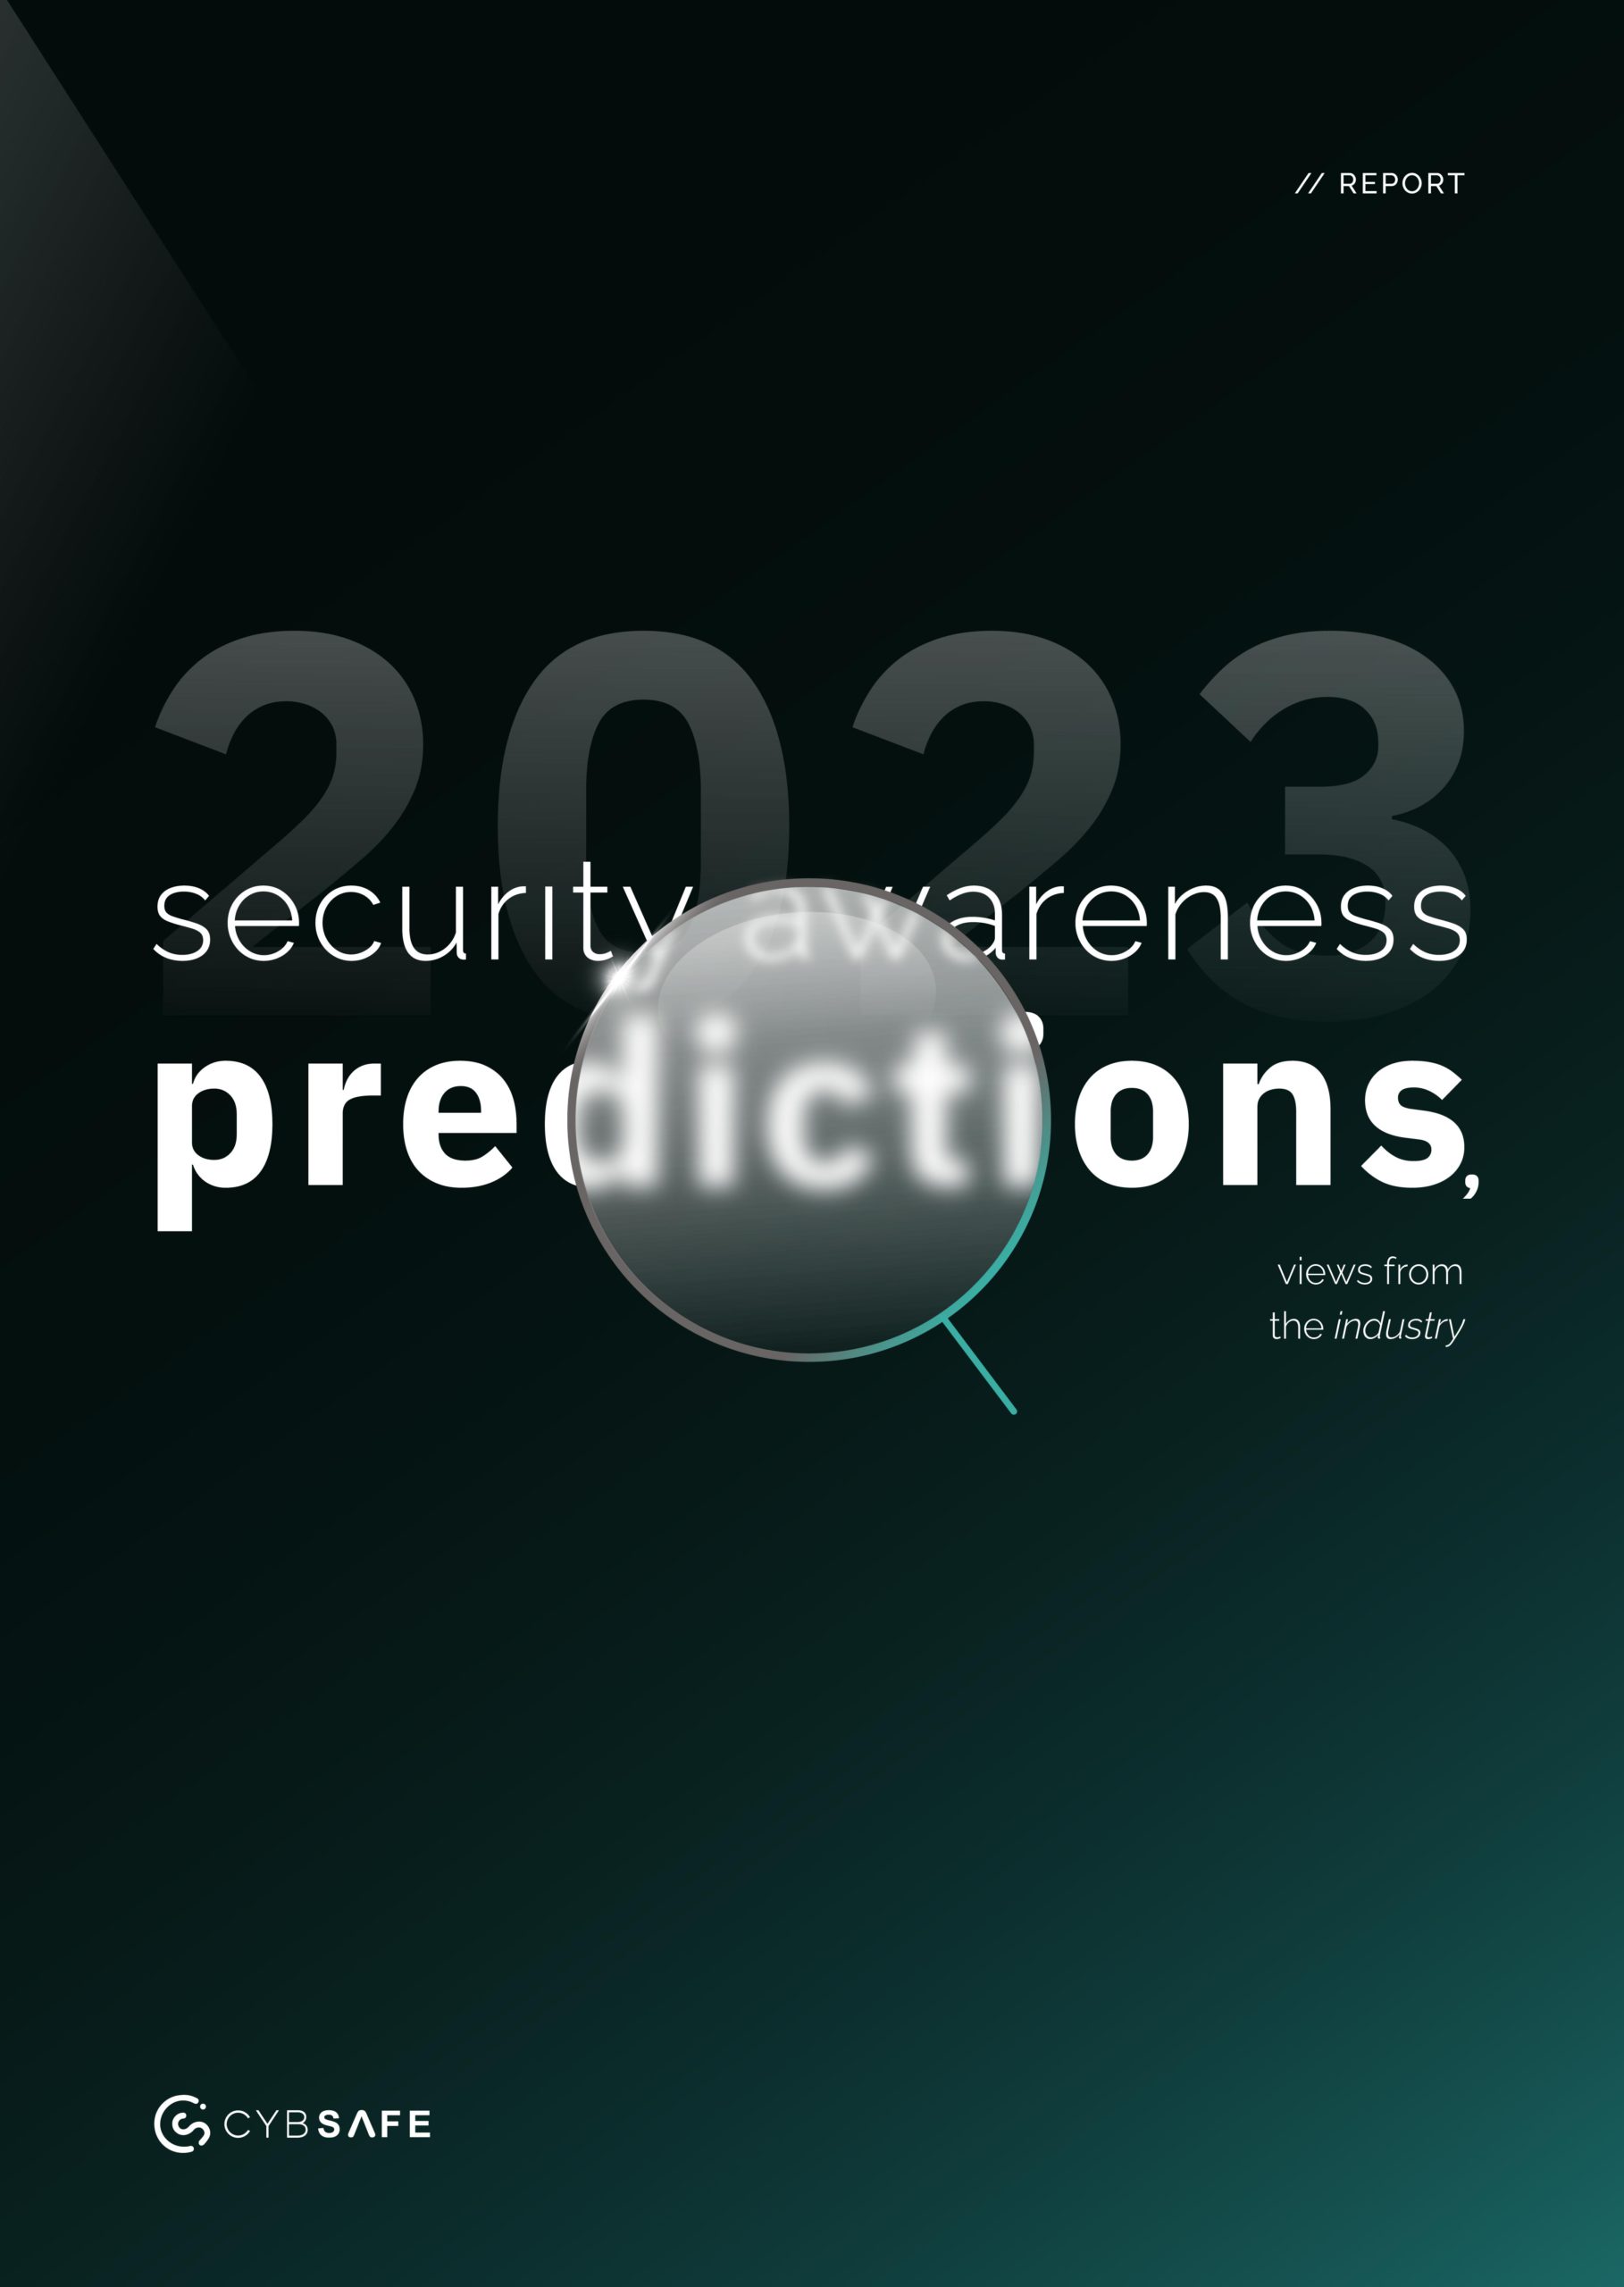 2023 security awareness predictions report